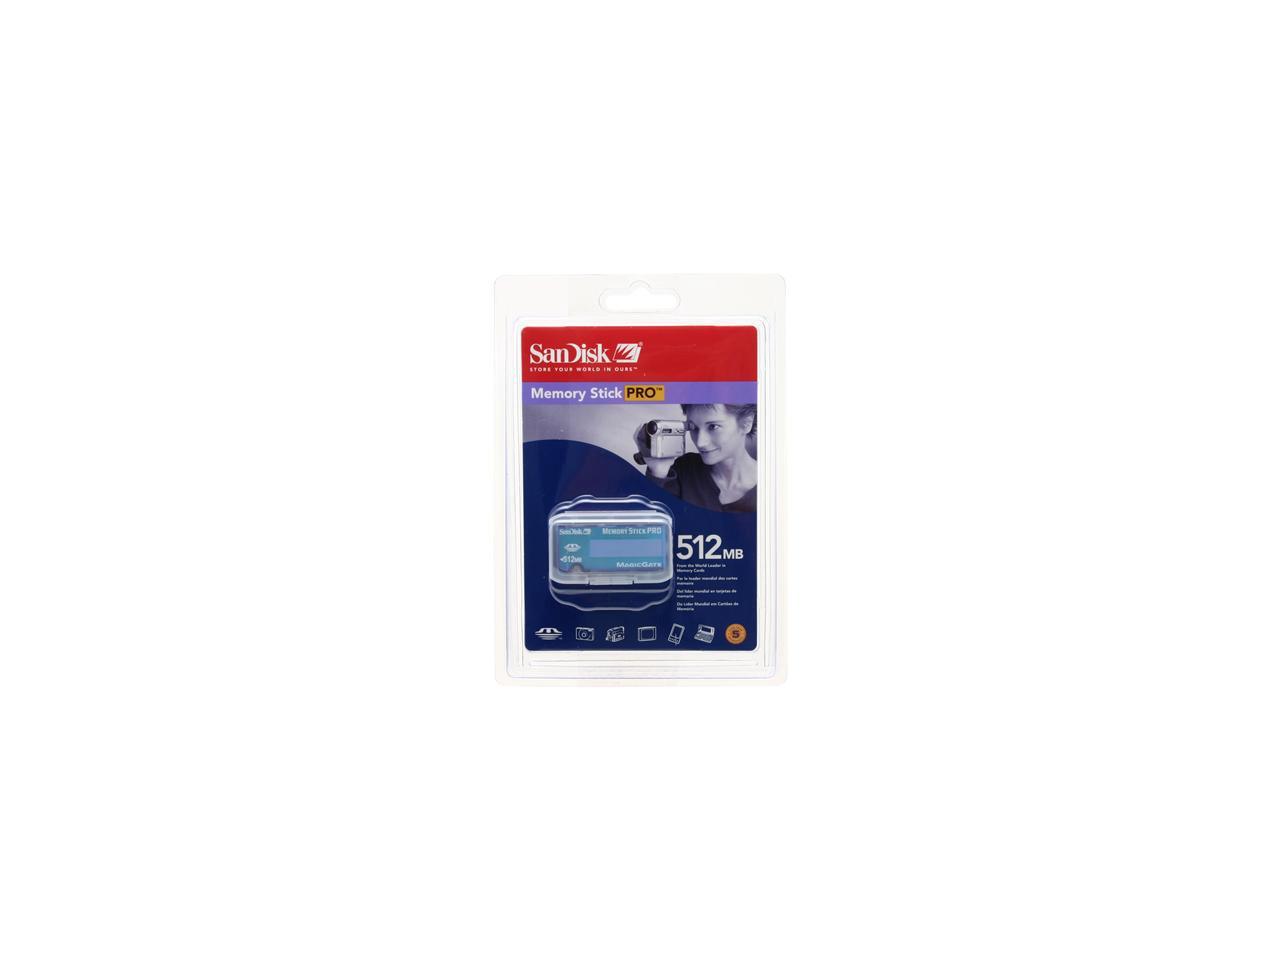 Retail Package SanDisk SDMSV-512-A10 512 MB MemoryStick Pro 